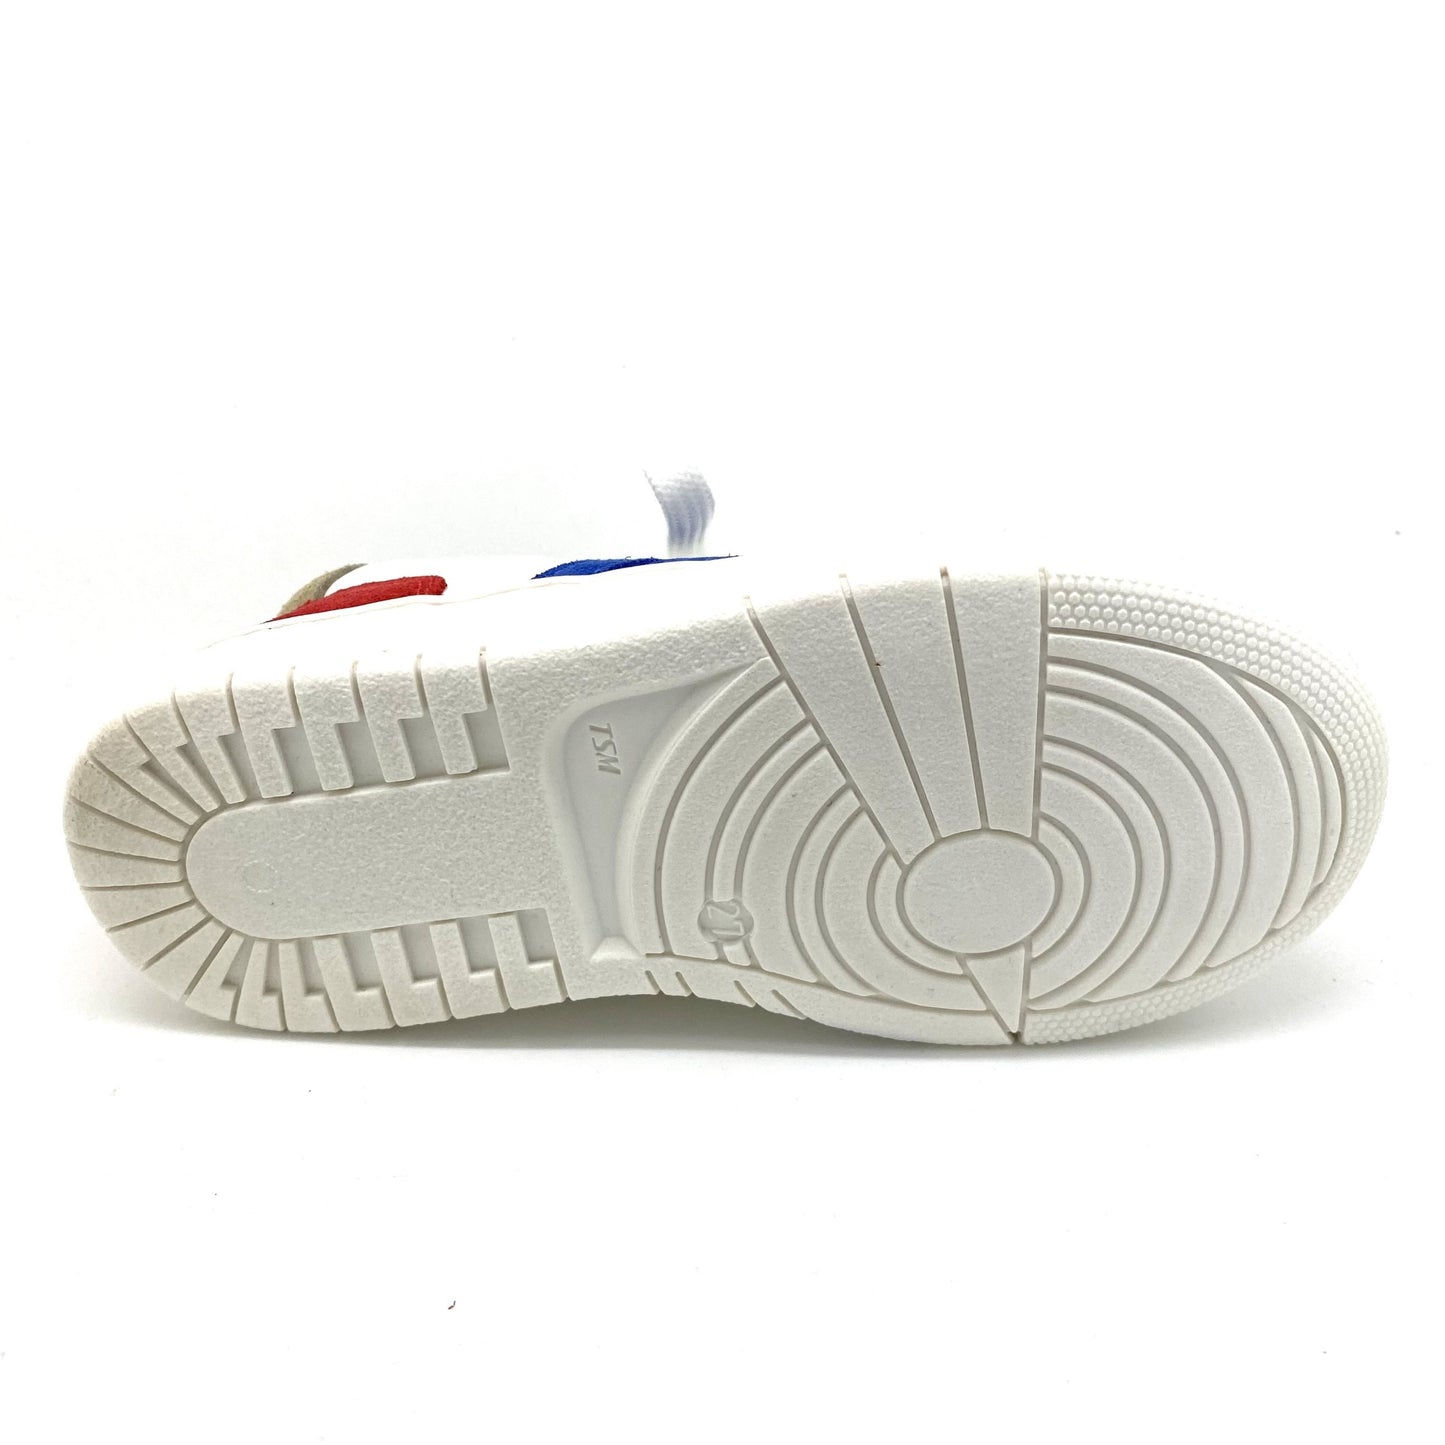 Lunella lage sneaker wit met rood en blauwe accenten.